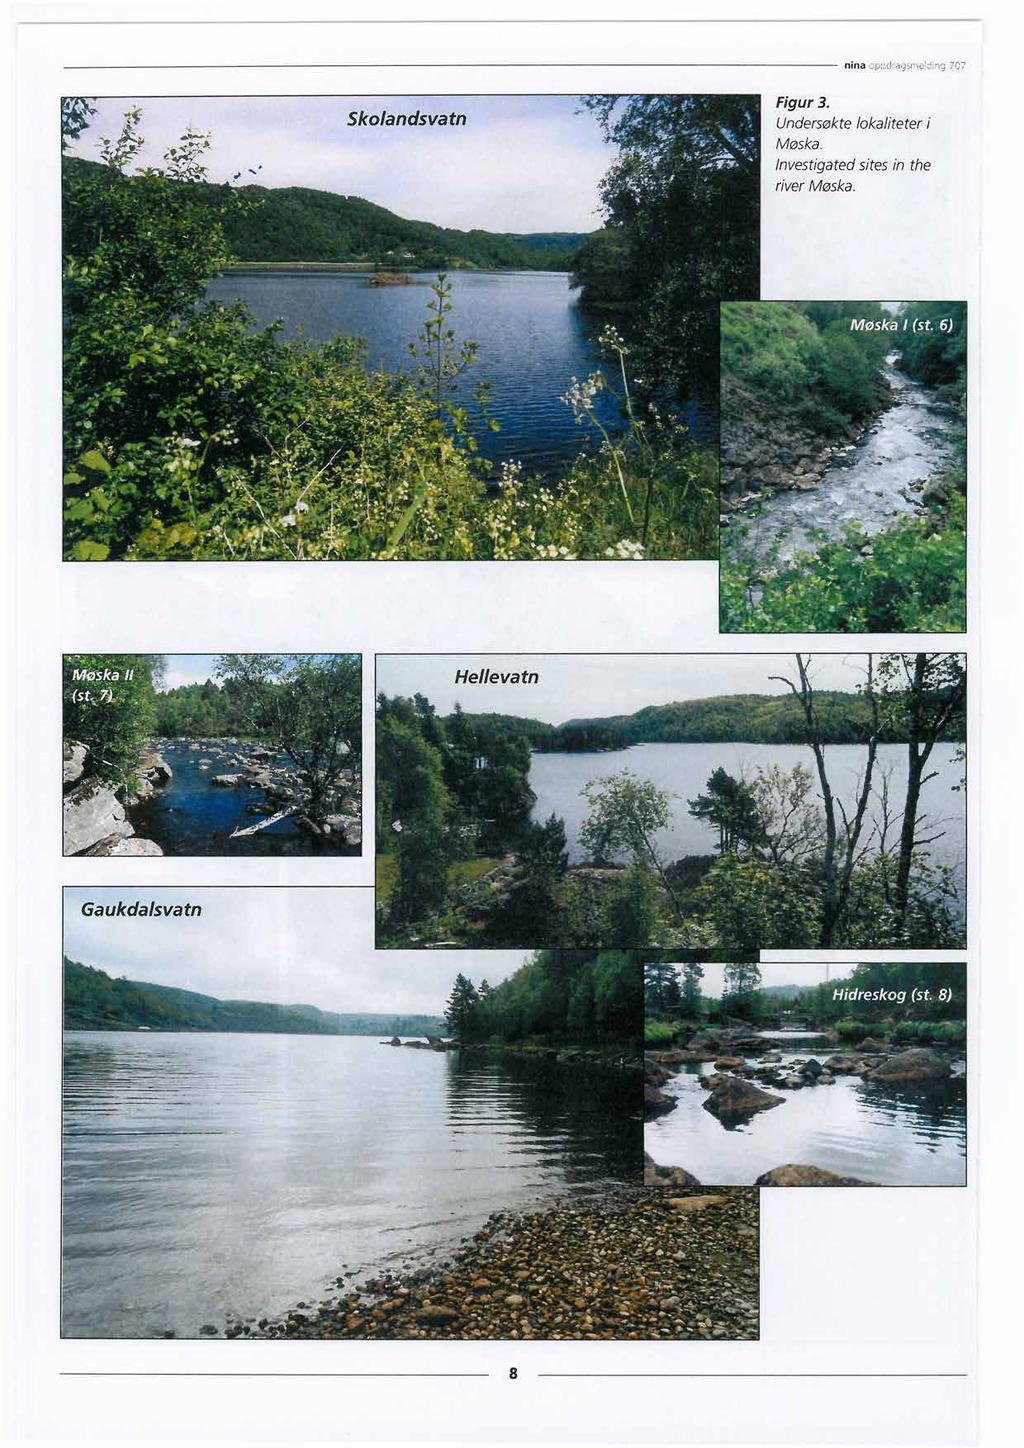 nina 707 Skolandsvatn k Figur 3. Undersøkte lokaliteter i Møska. Investigated sites in the river Møska.